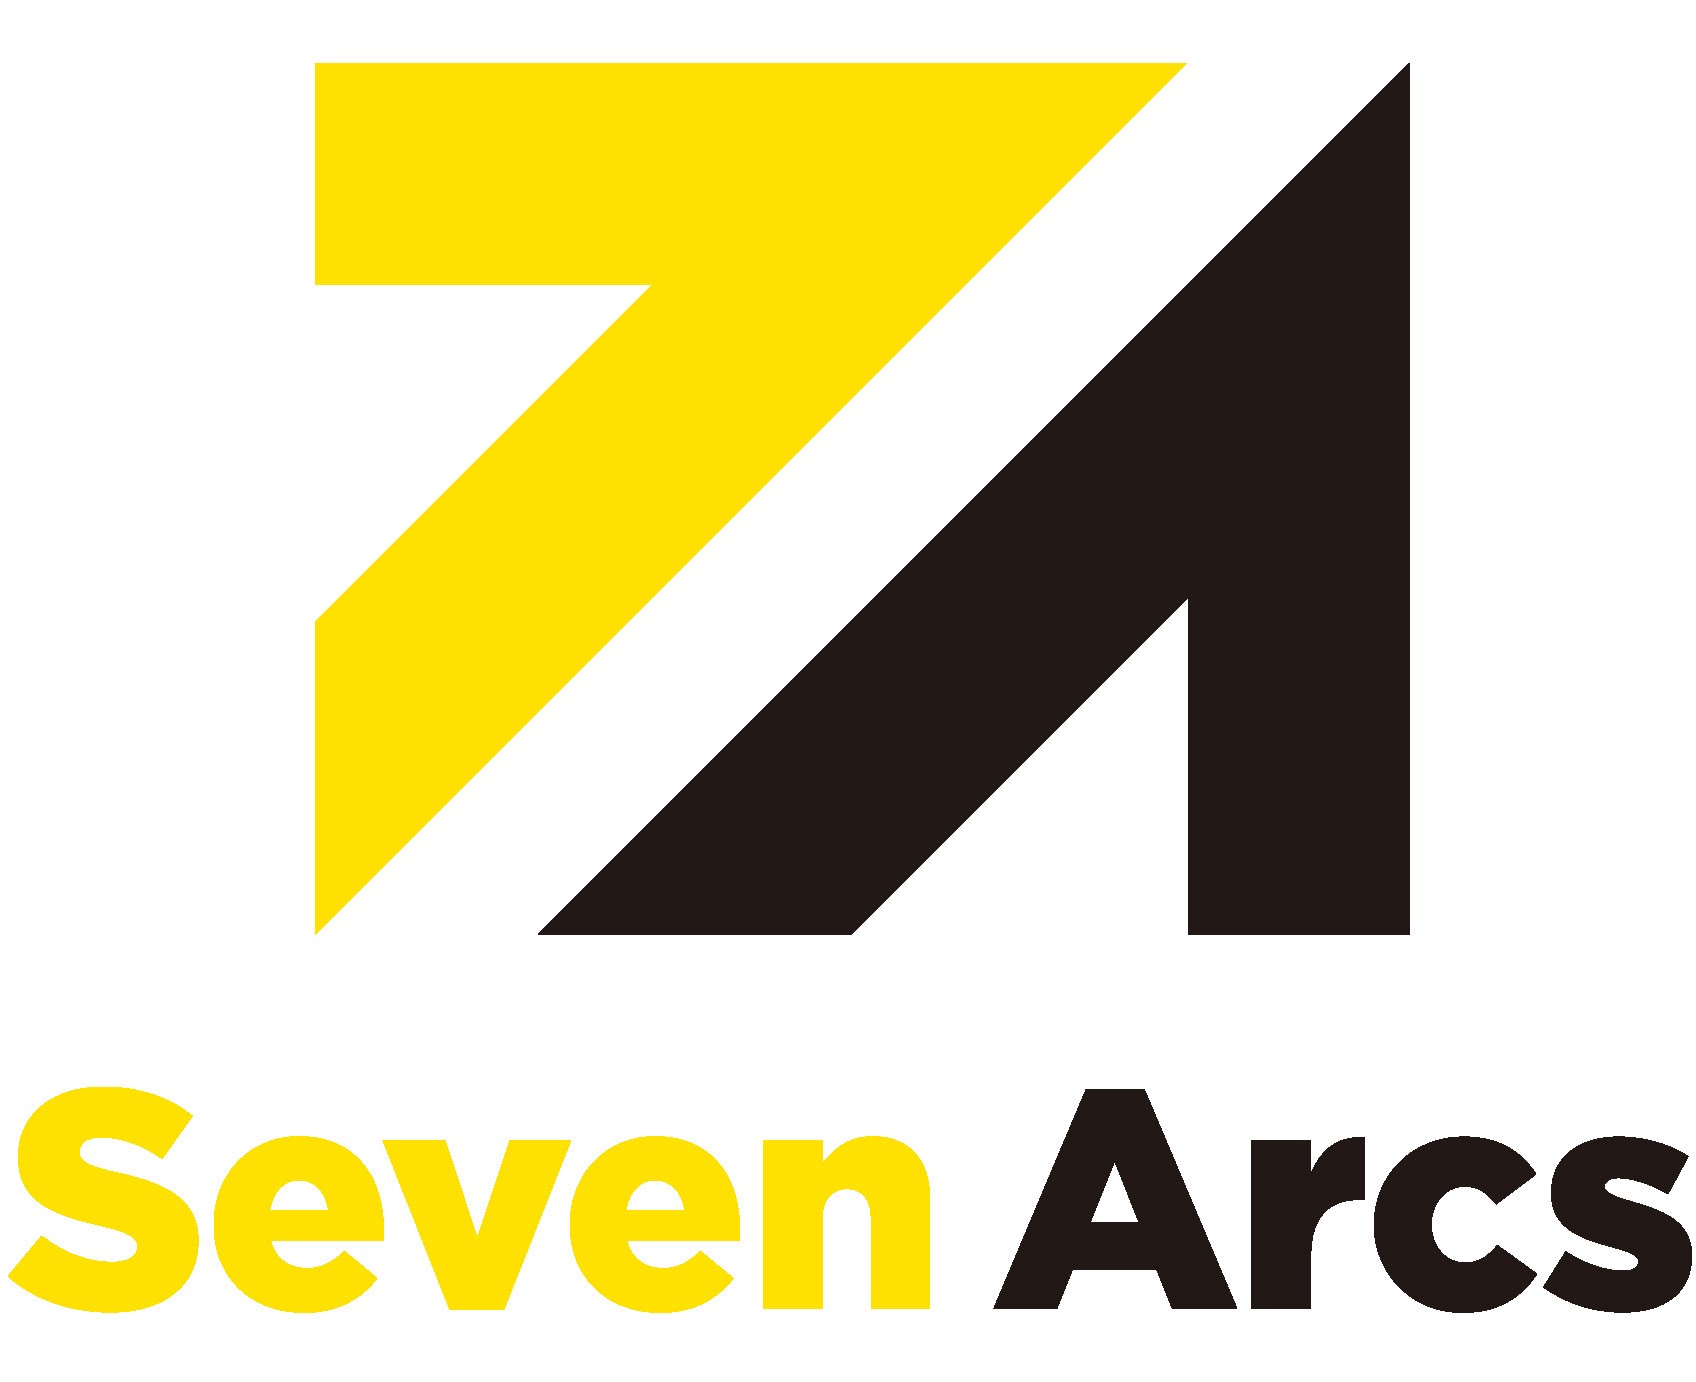 Seven Arcs.jpg